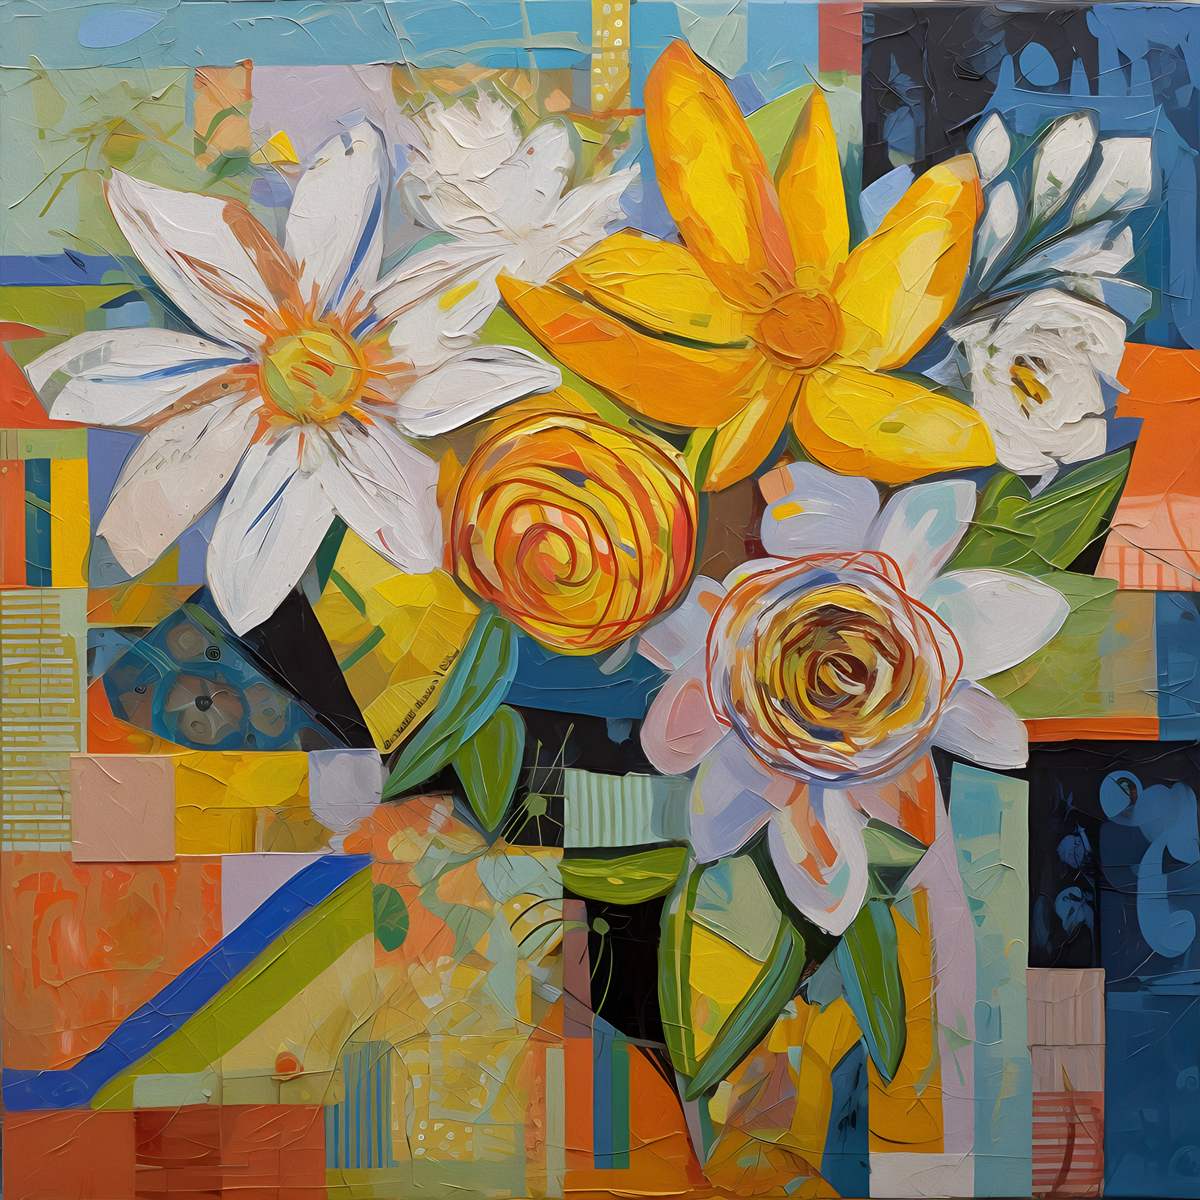  Radiant Sunshine: 'Yellow Flowers' Art Collection - Art Print on Canvas. Artemyst